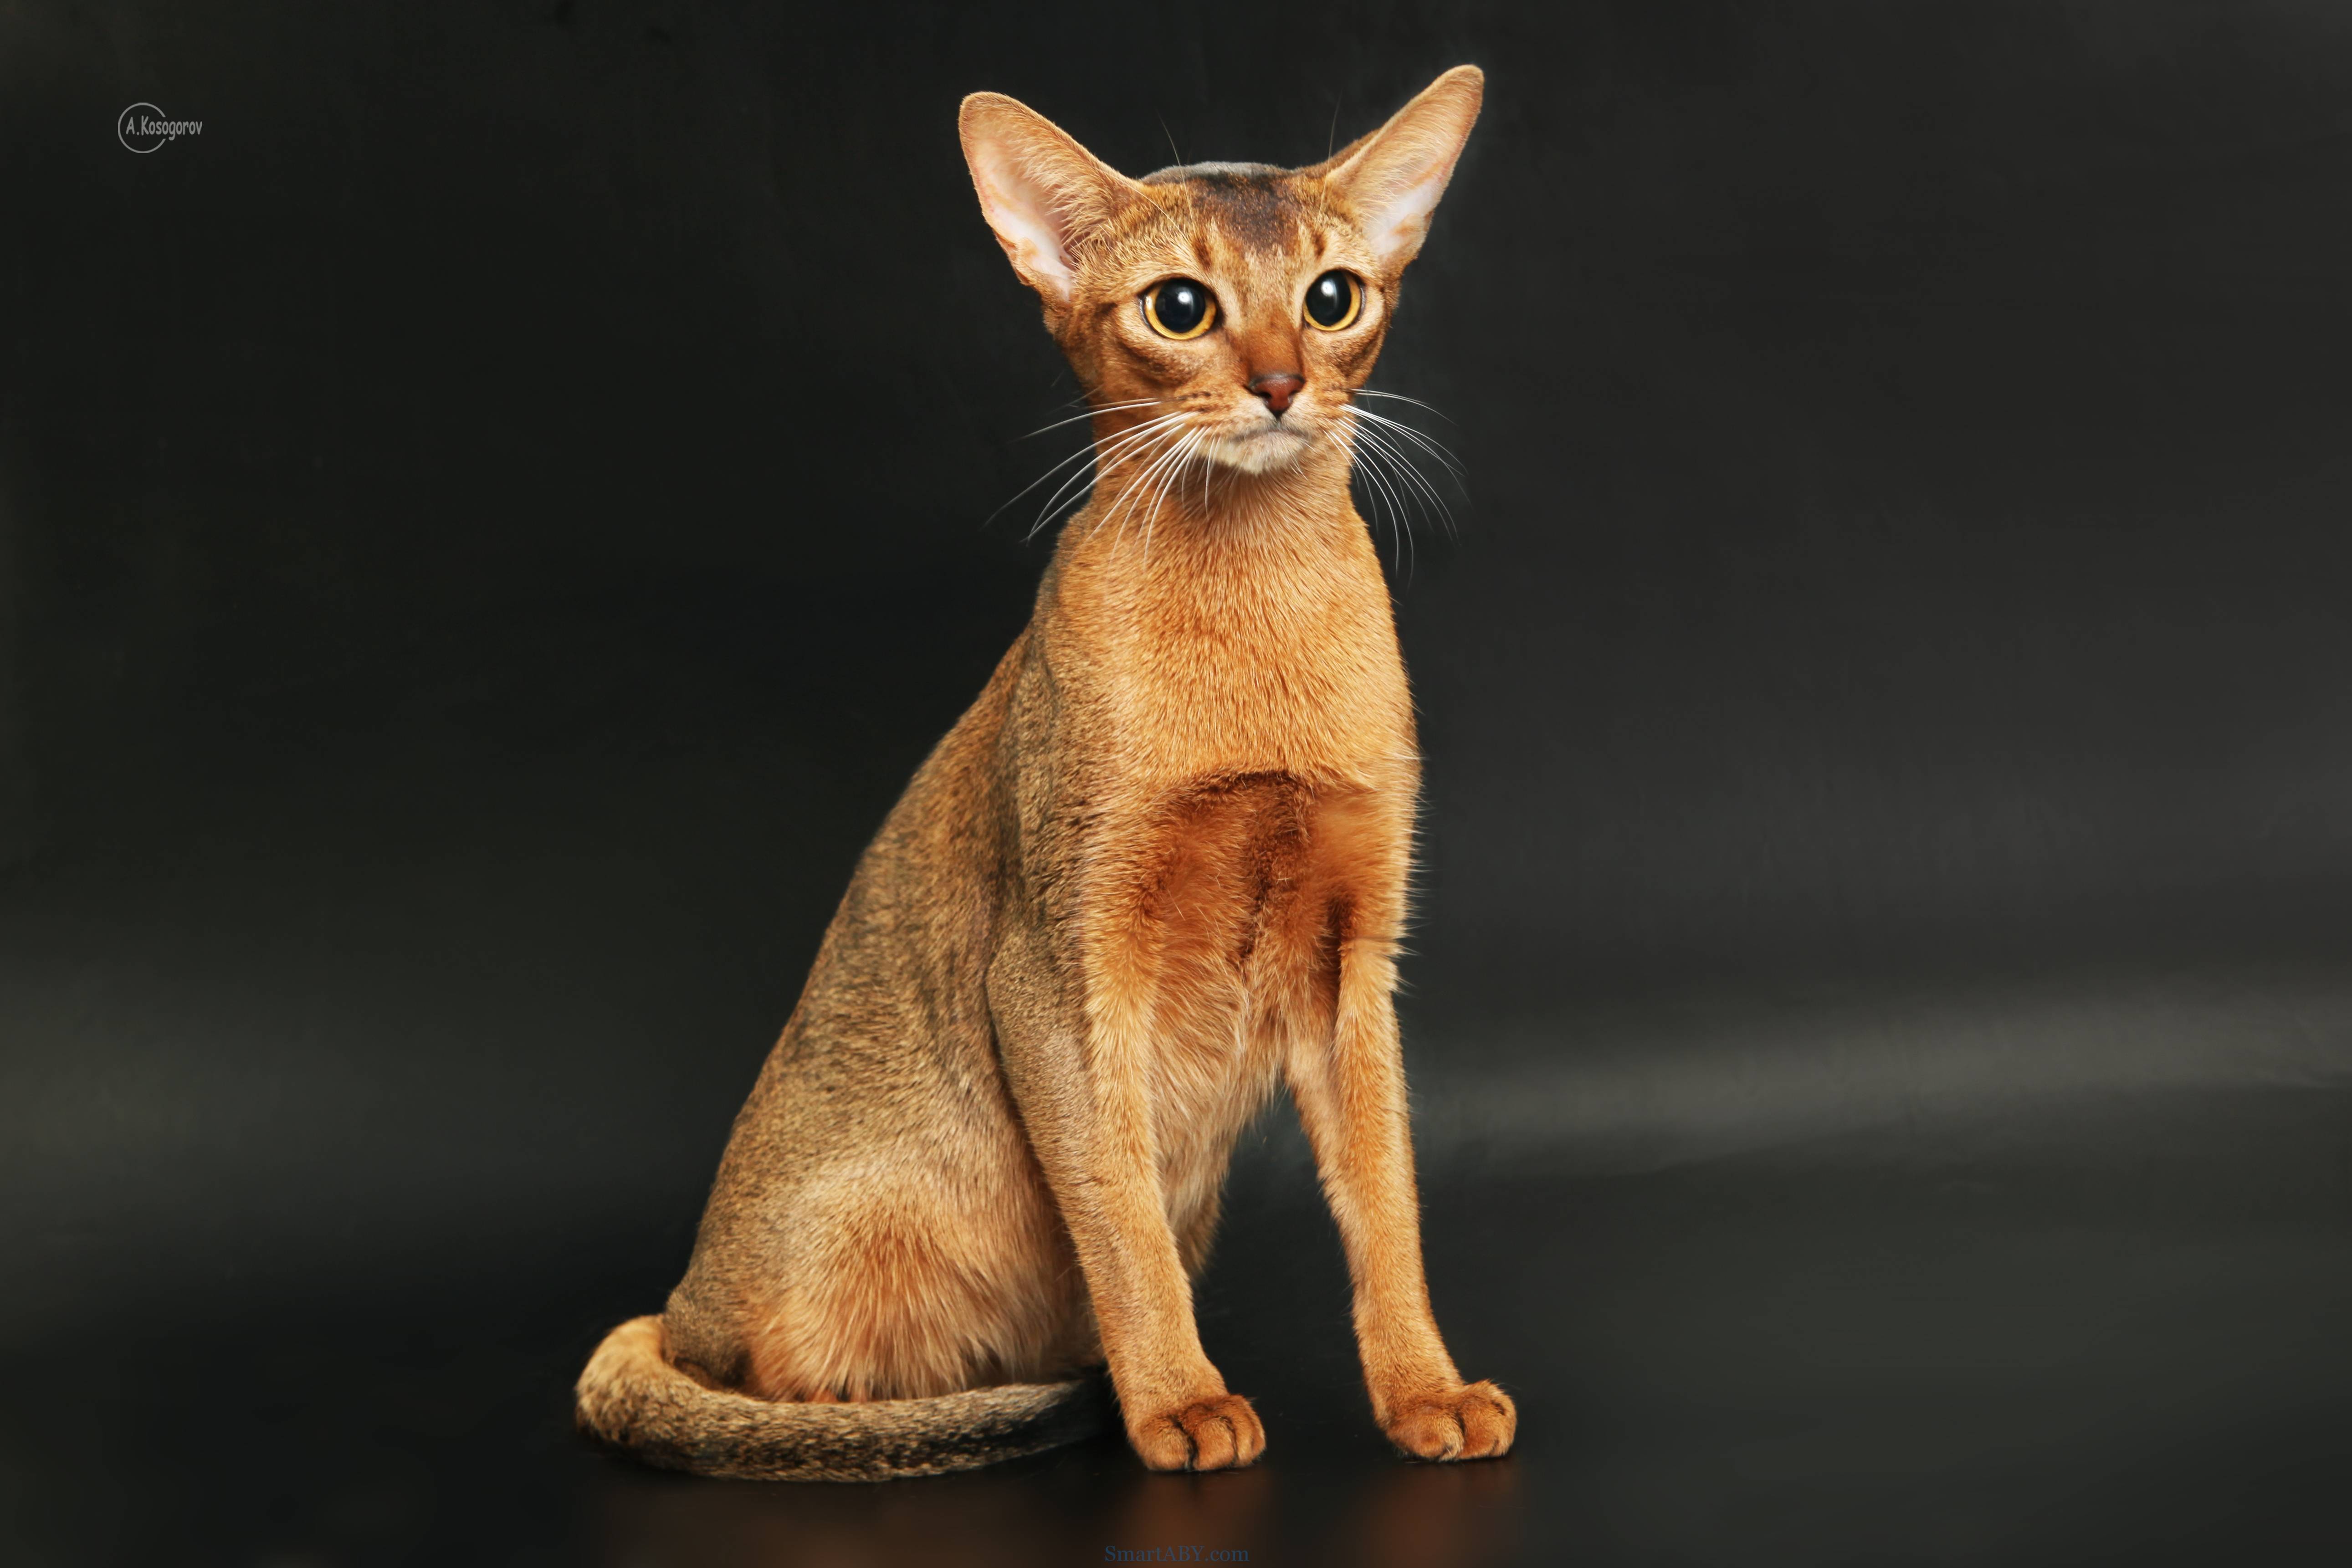 Абиссинская кошка: фото, описание породы, окрас, характер, стандарт